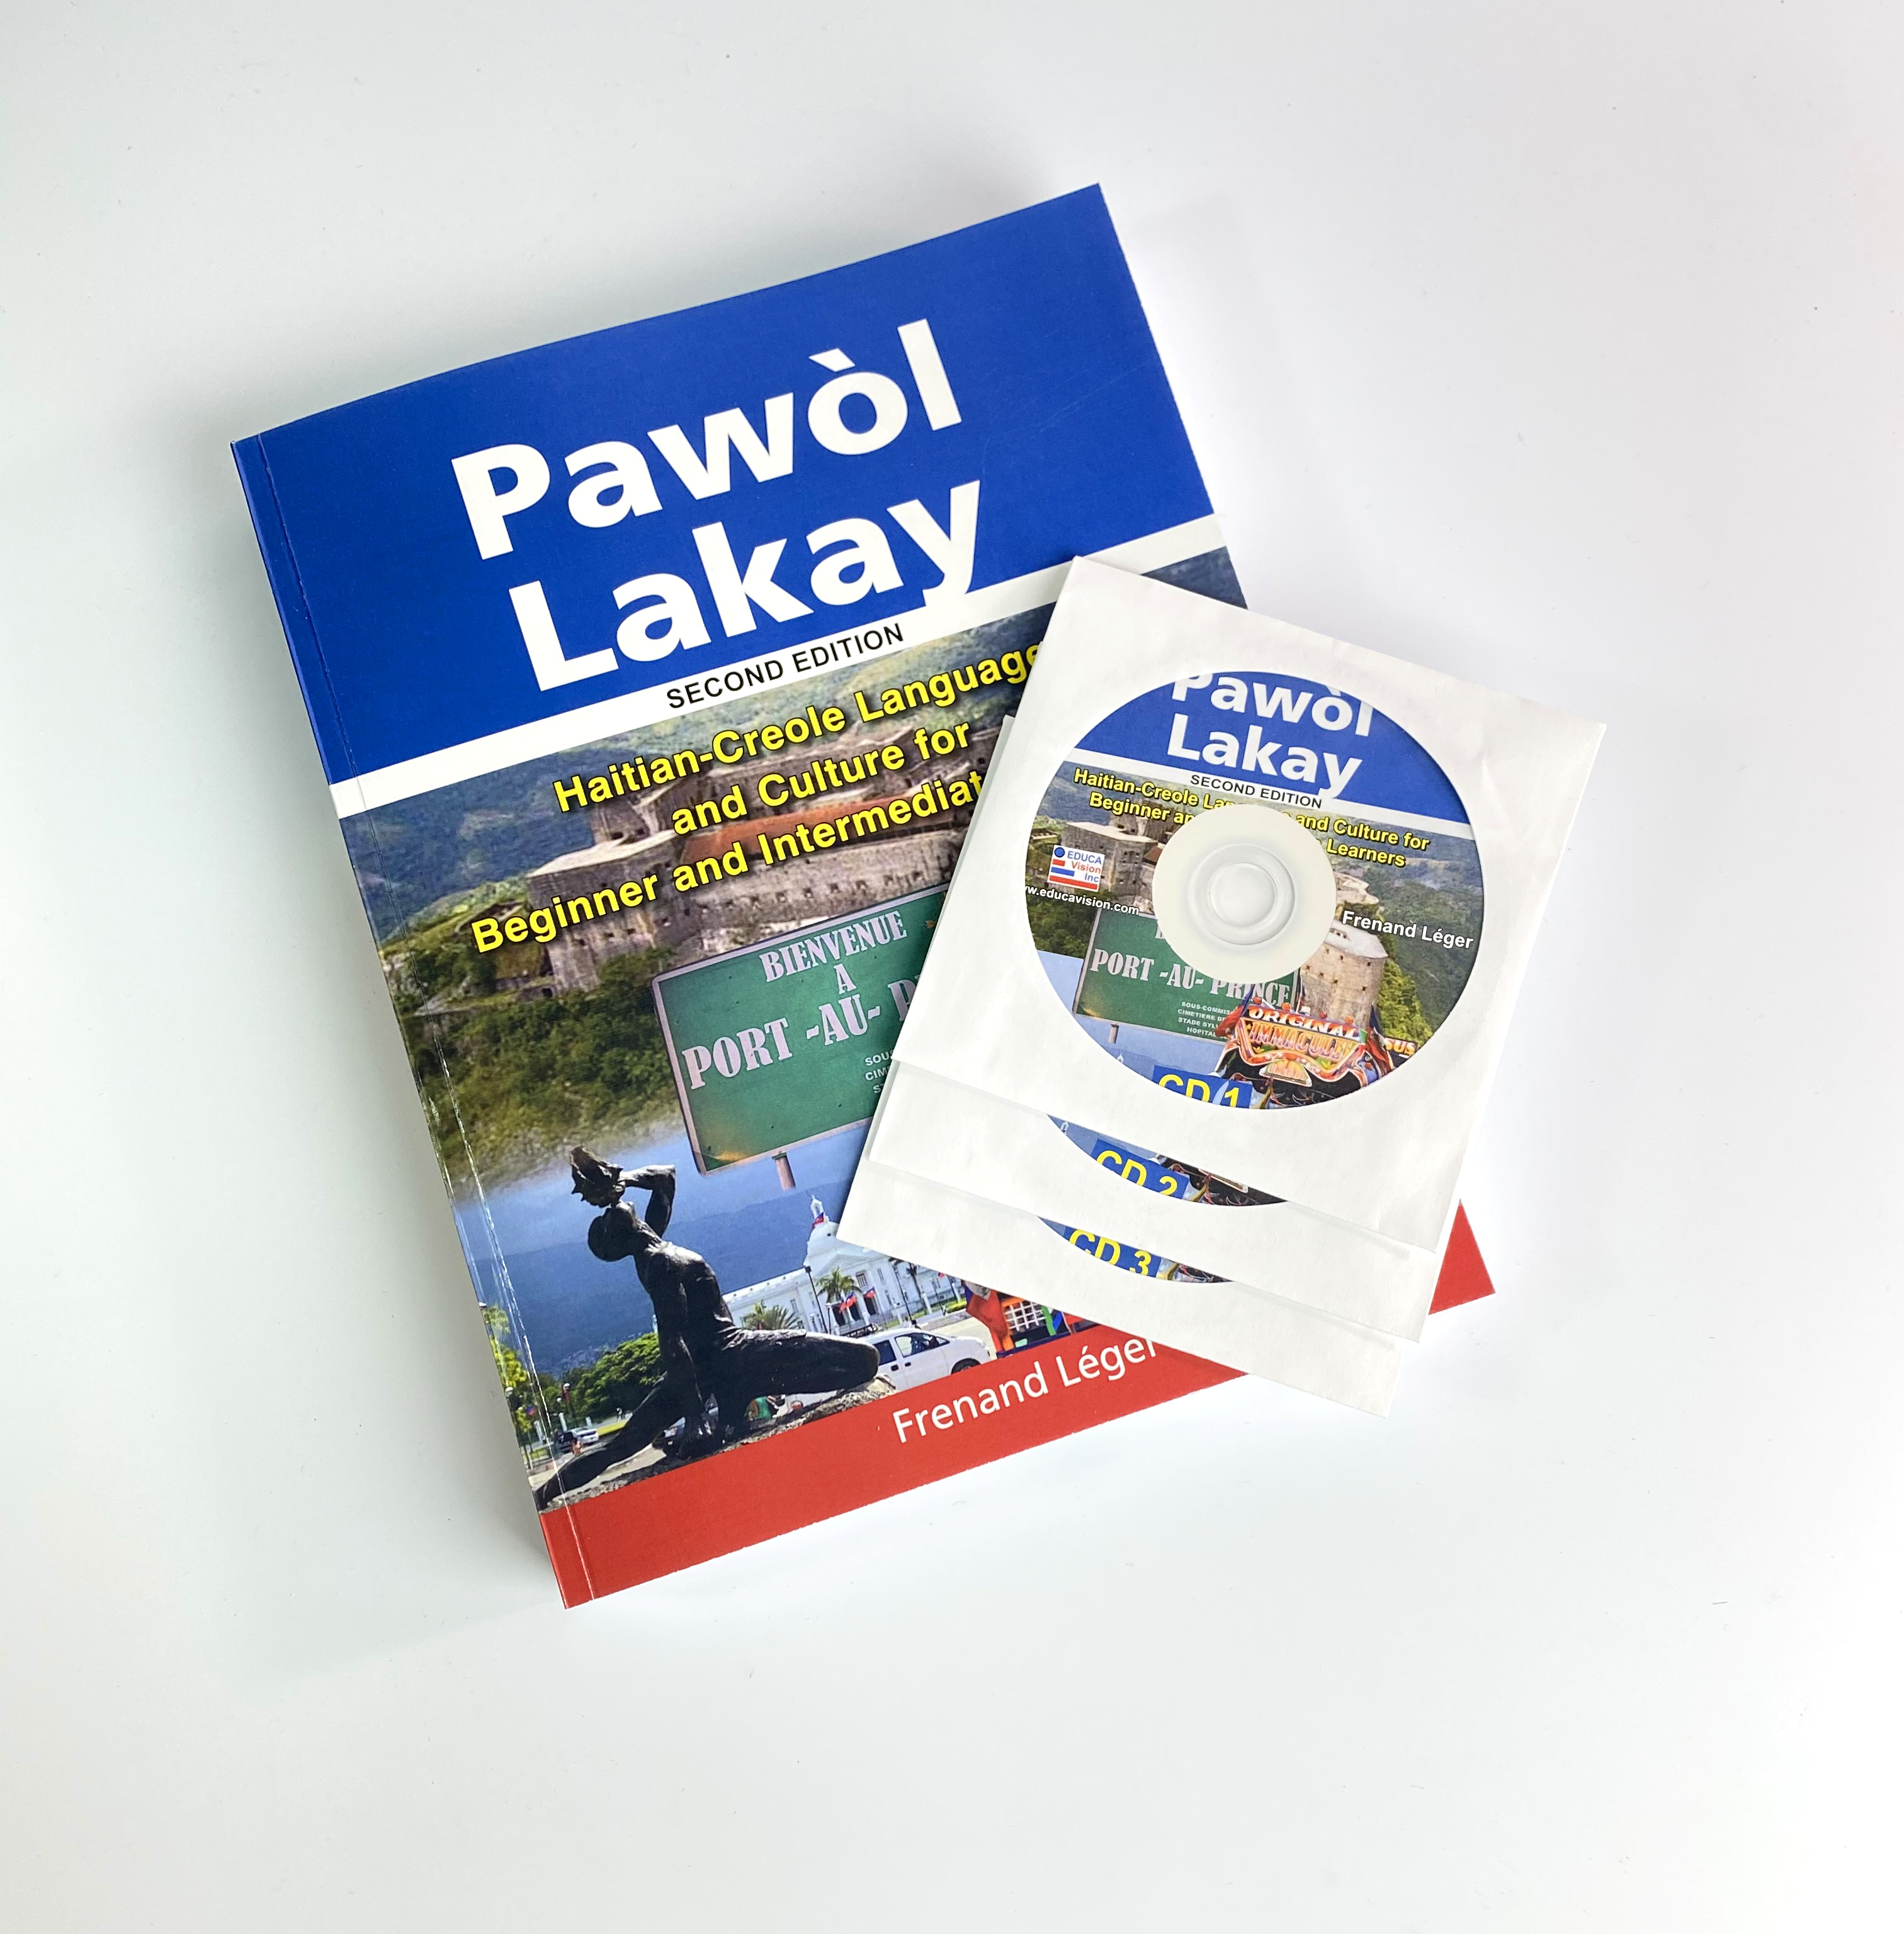 Pawòl Lakay (Book and CD)